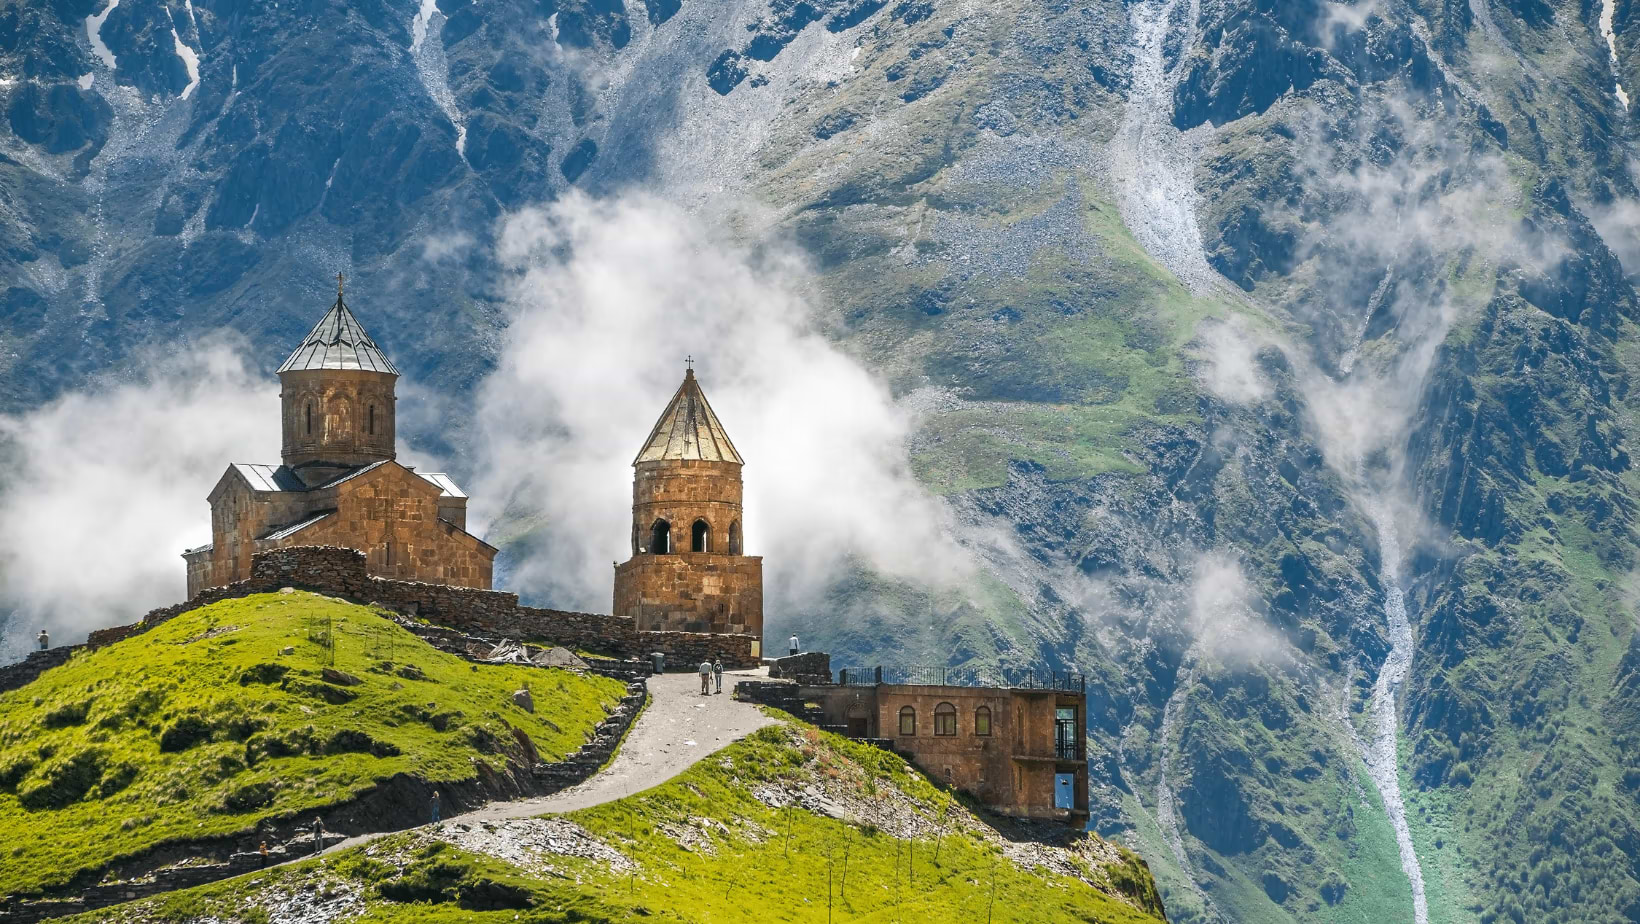 An ancient Georgian castle against a mountain background